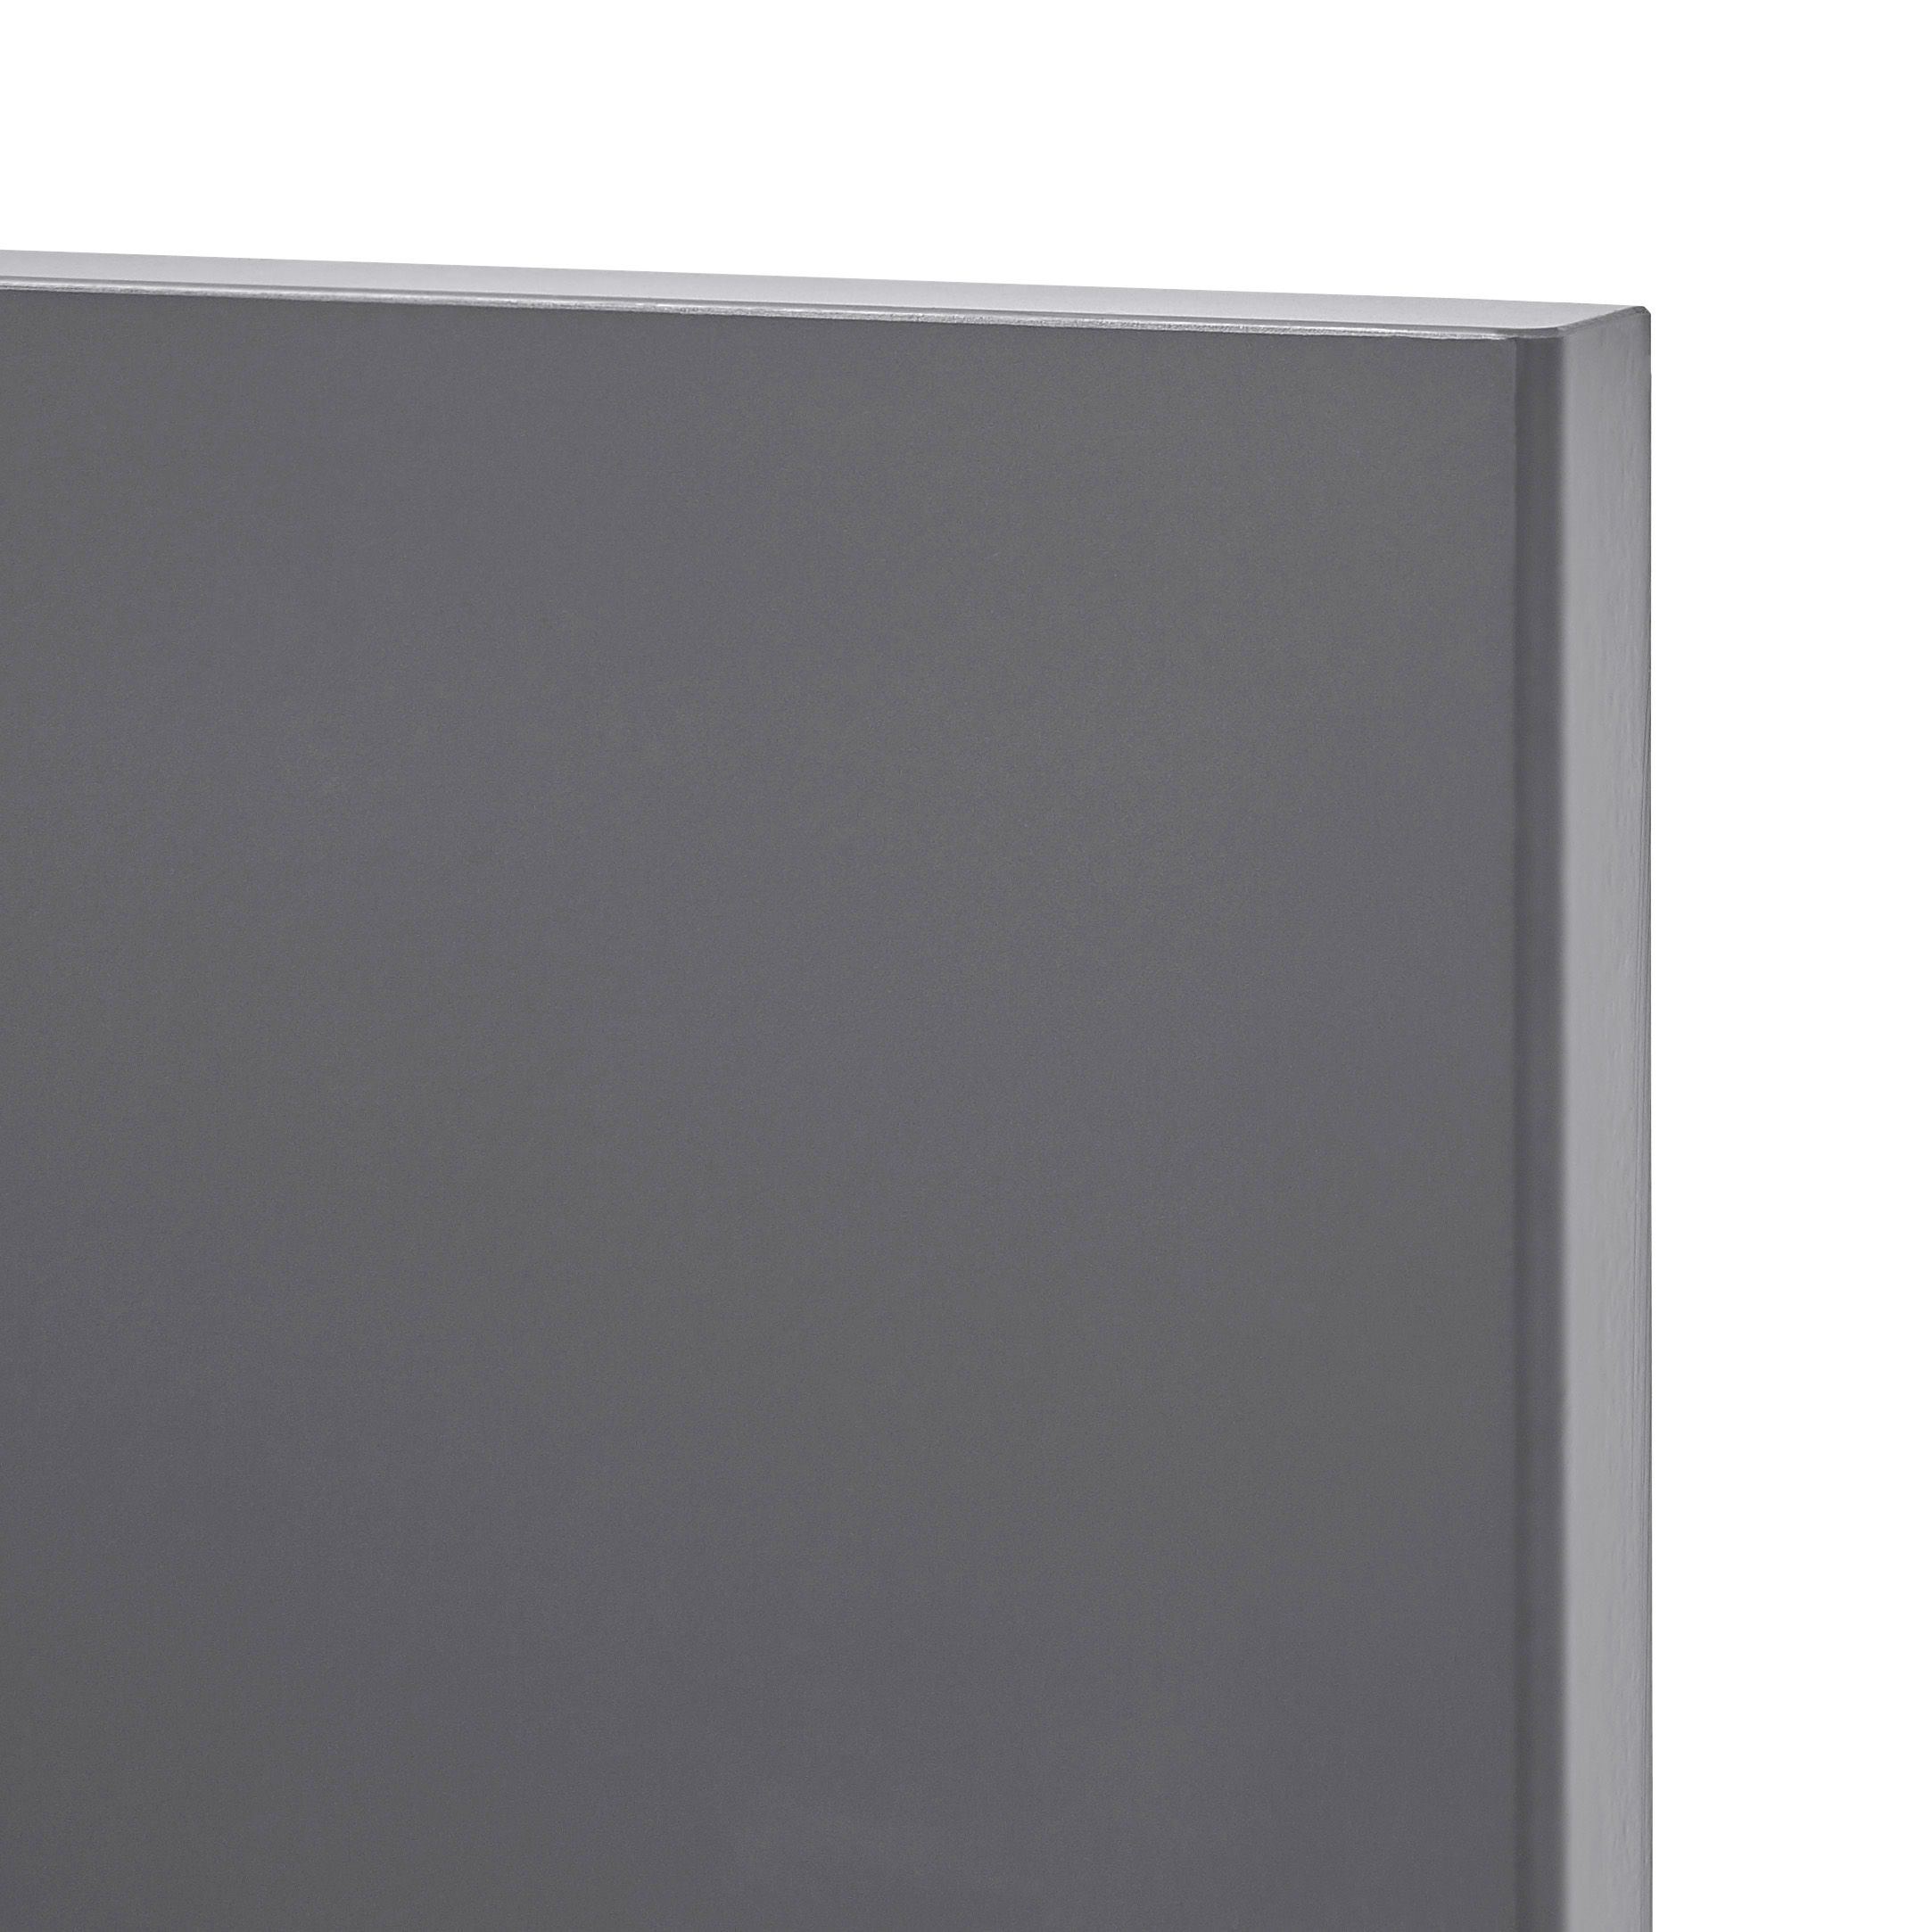 GoodHome Stevia Gloss anthracite slab Drawer front, bridging door & bi fold door, (W)500mm (H)356mm (T)18mm